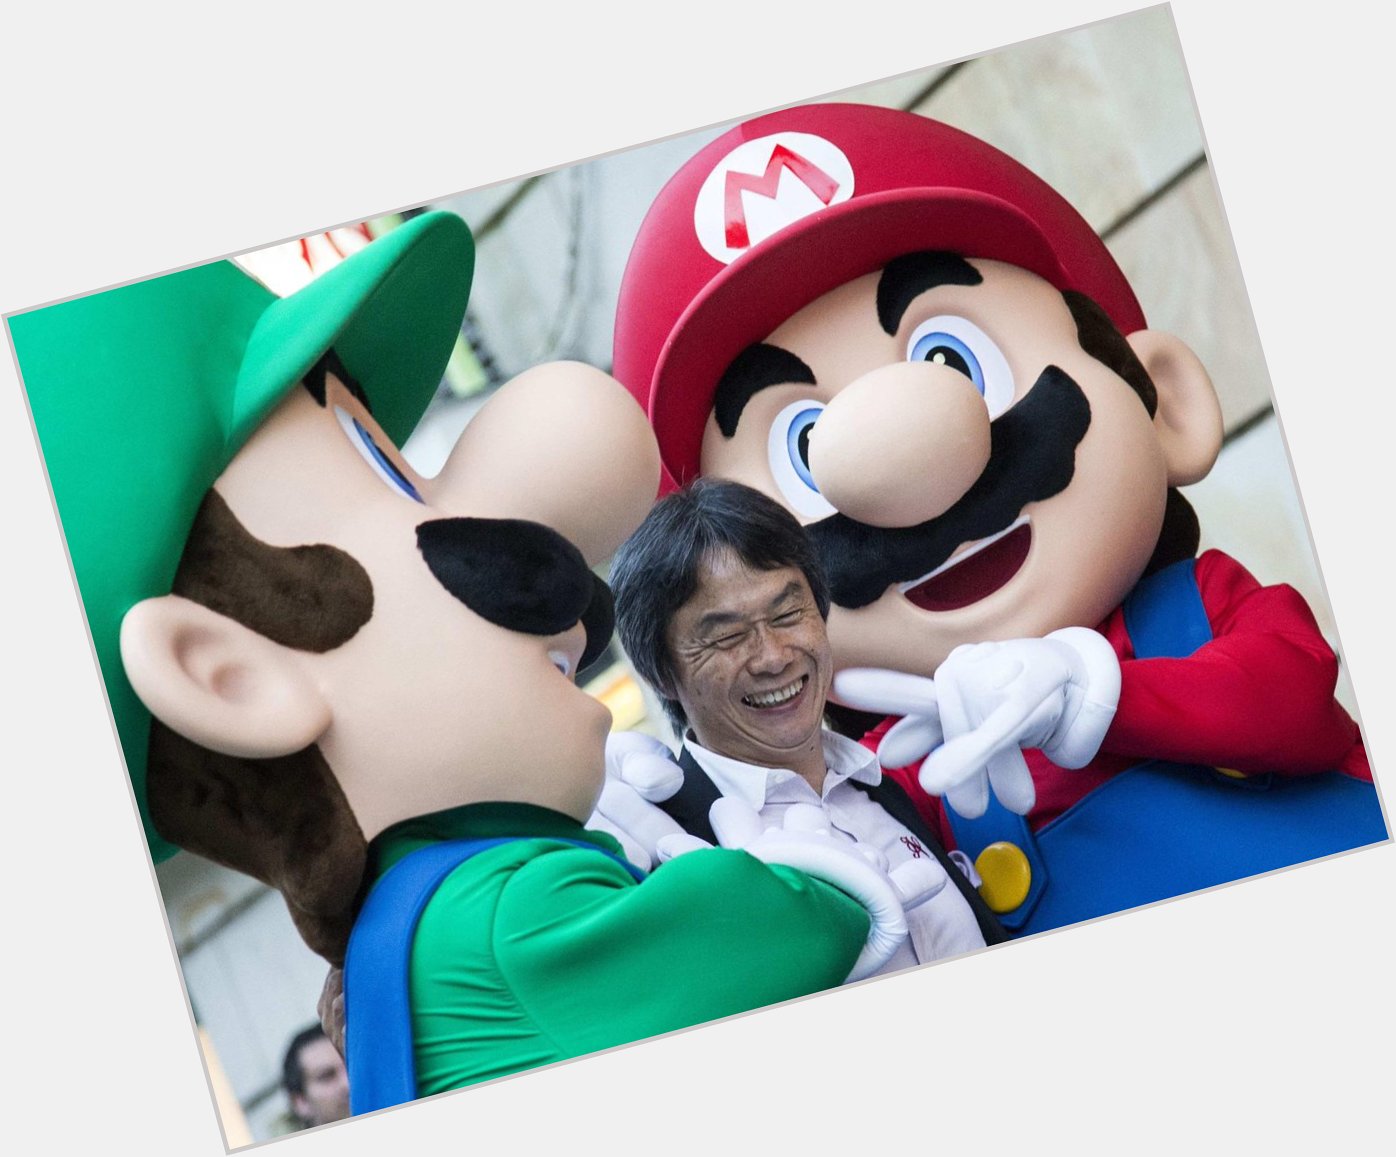 I nearly forgot: happy birthday Shigeru Miyamoto! Hope we may enjoy you and your games for many more years. 